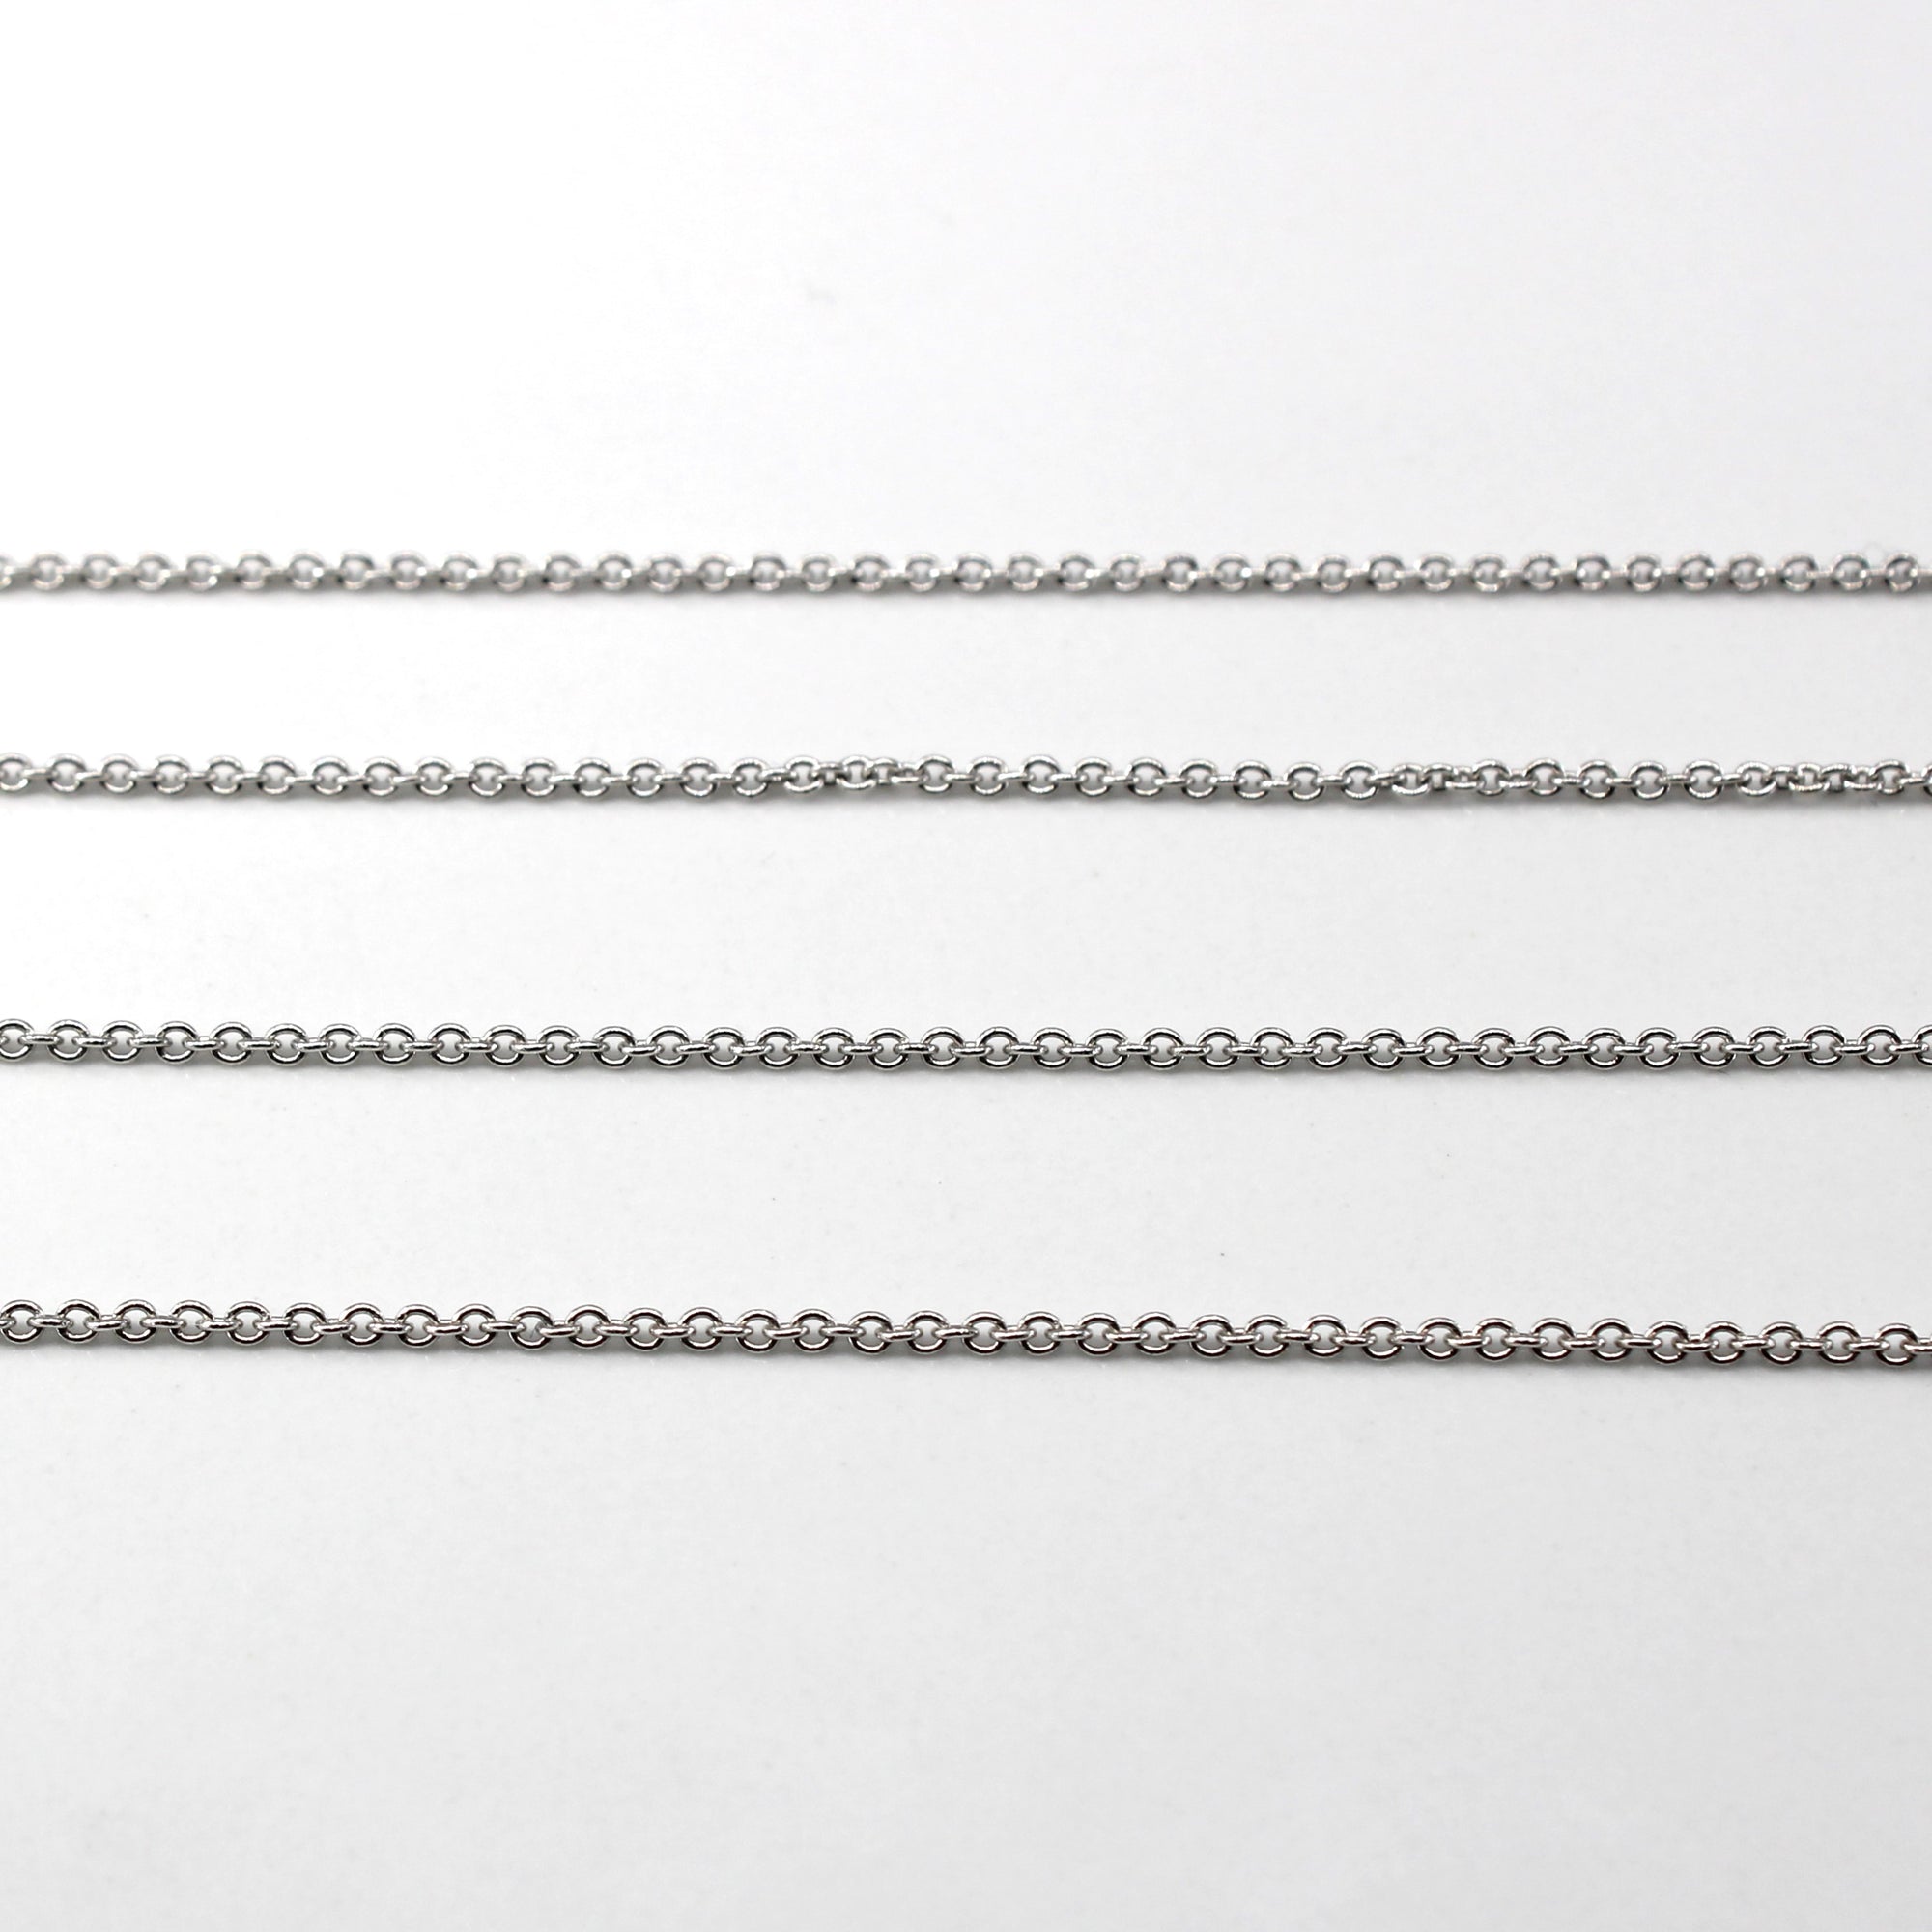 'Tiffany & Co' Diamond Key Pendant Necklace | 1.06ctw | 23